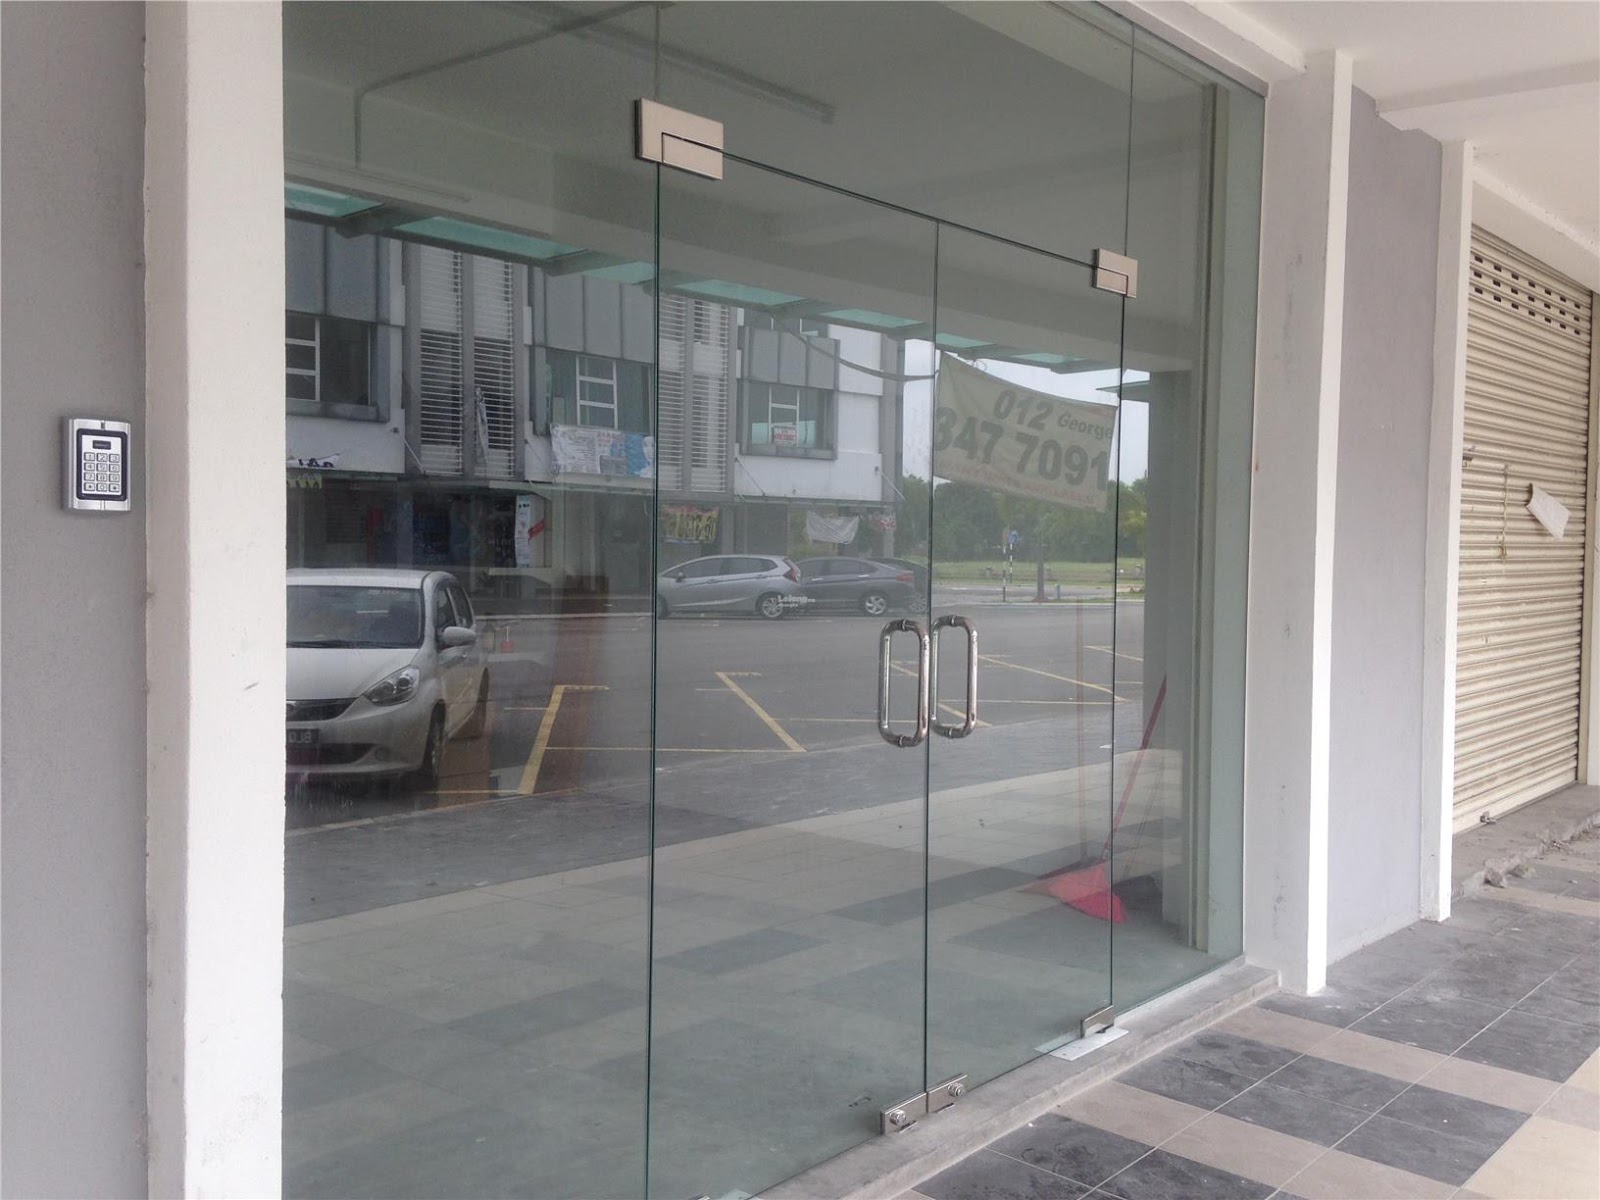 Jual Pintu Kaca Tempered Frameless di Medan Produk 